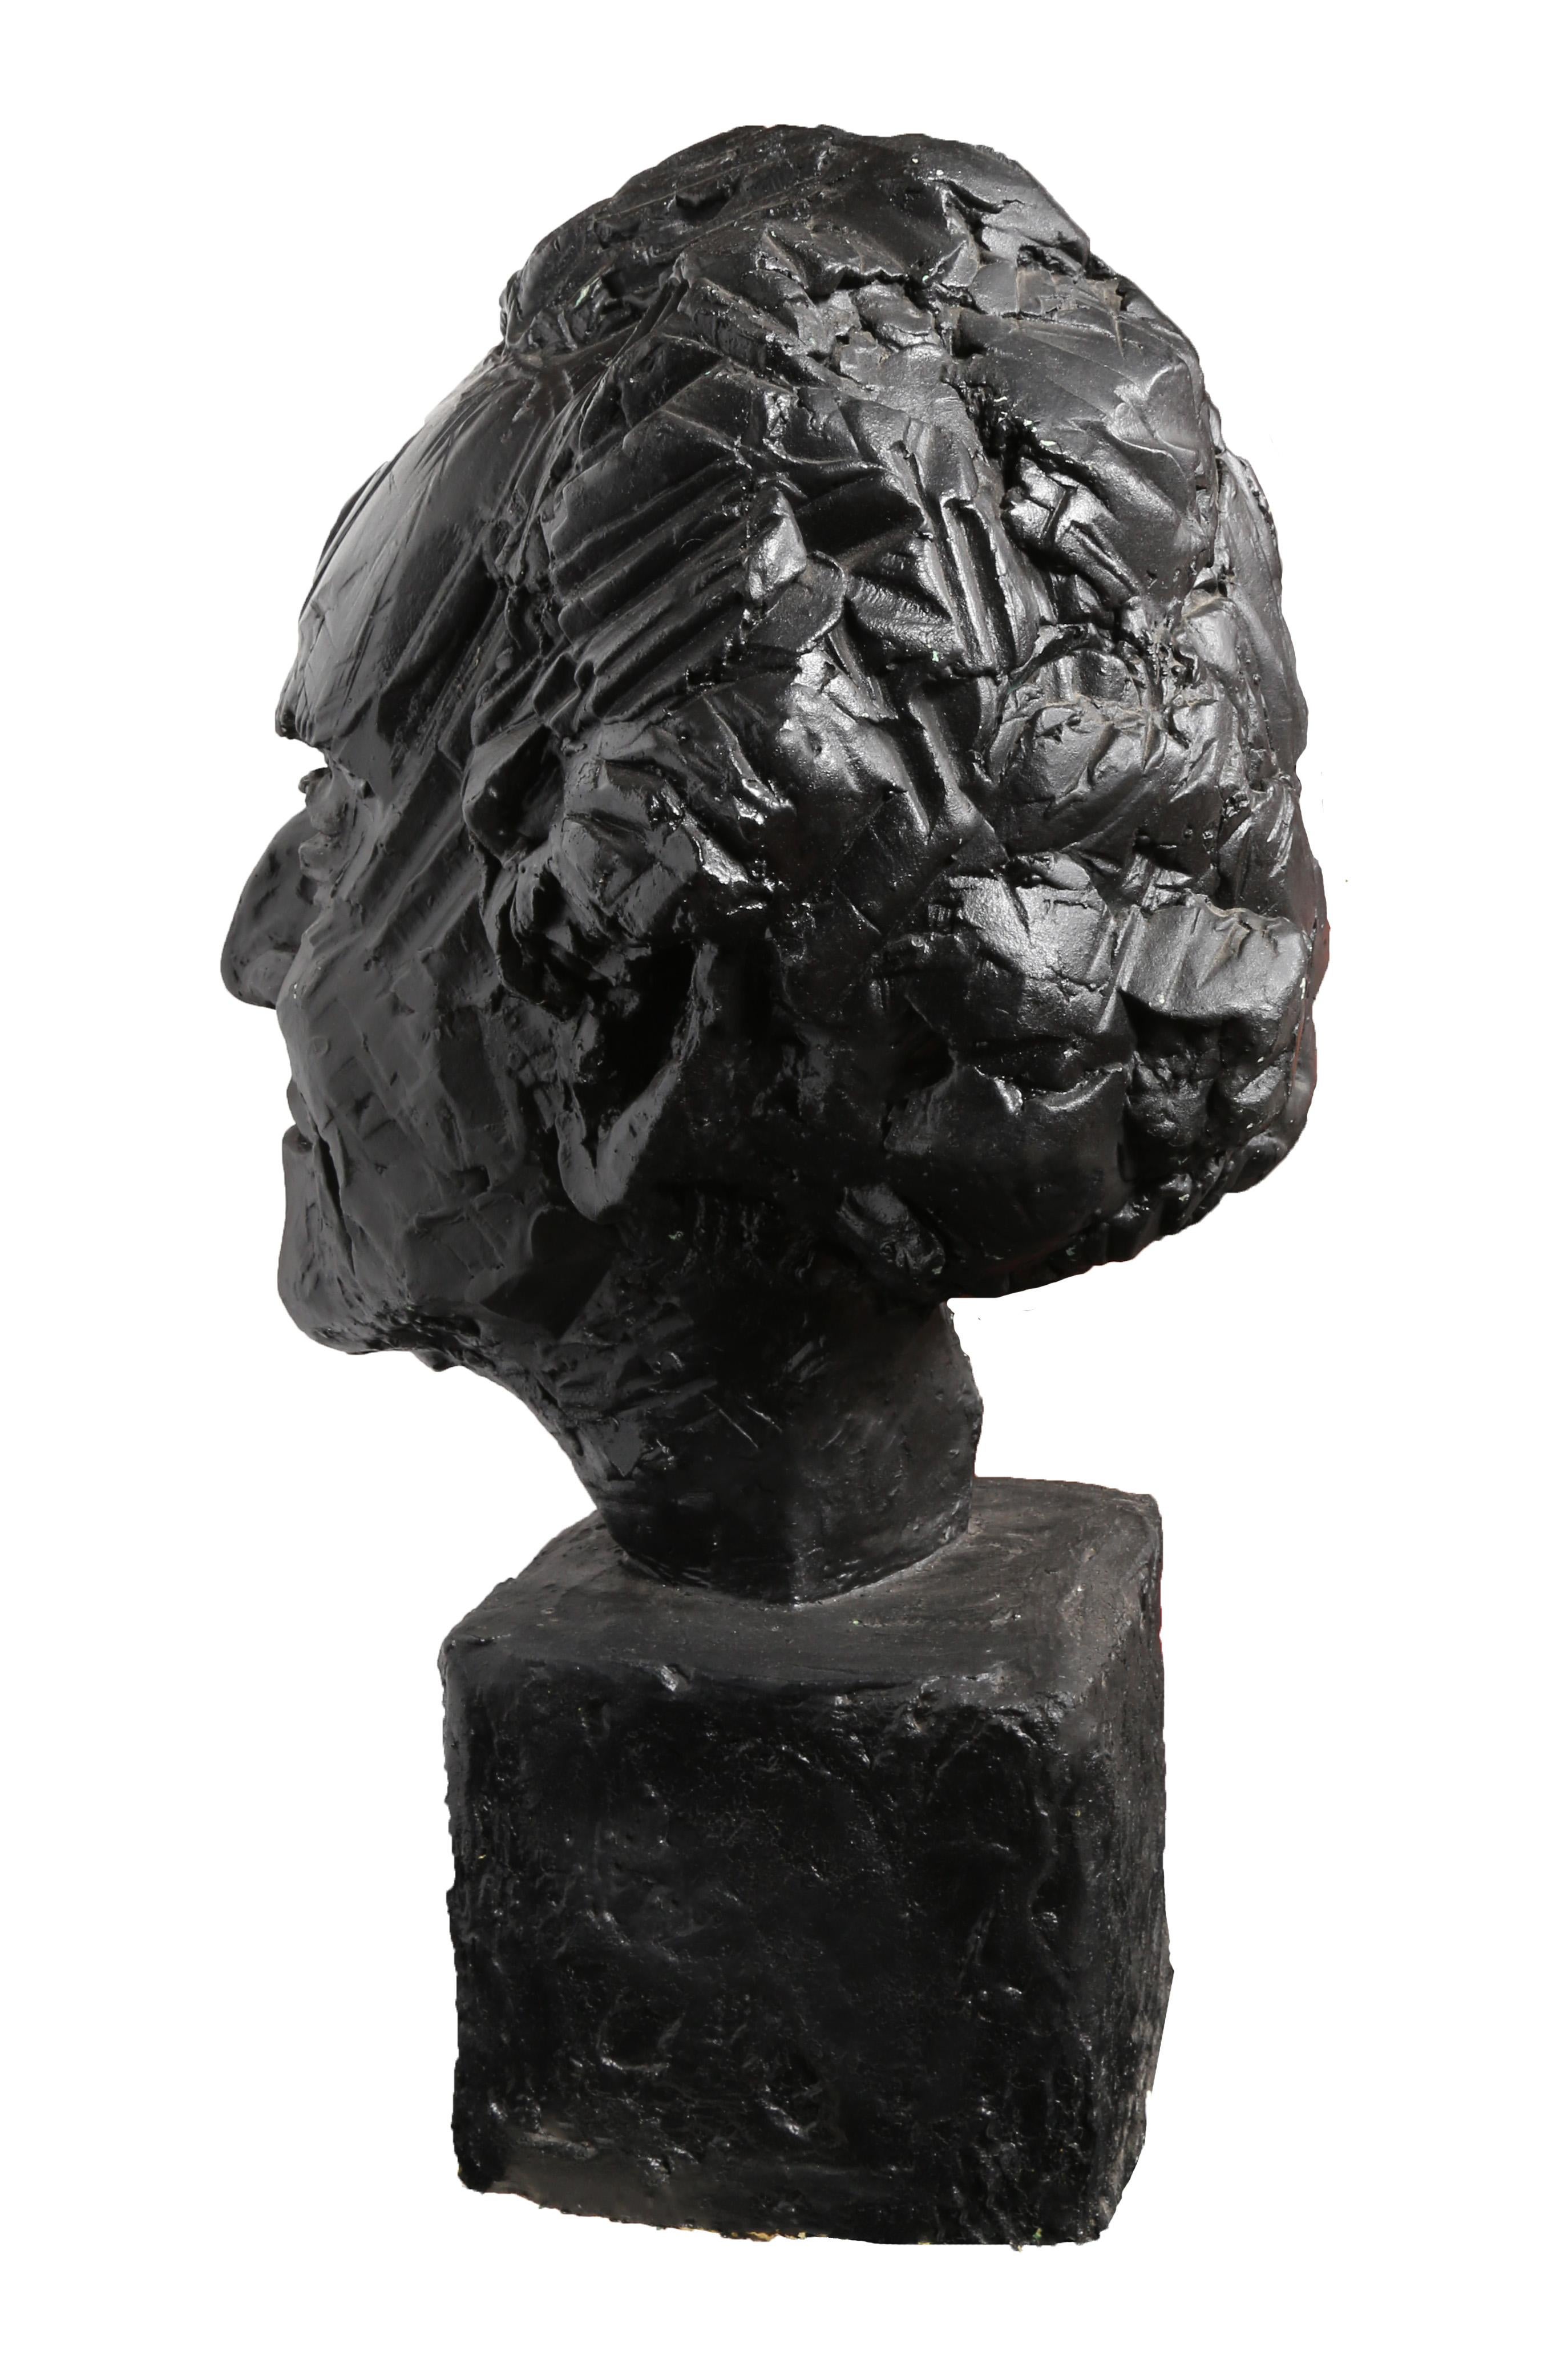 Artist: Paul Von Ringelheim, Austrian/American (1933 - 2003)
Title: Bust of Alberto Giacometti
Year: Circa 1970 
Medium: Painted Plaster 
Size: 29.5 x 13 x 17.5 inches